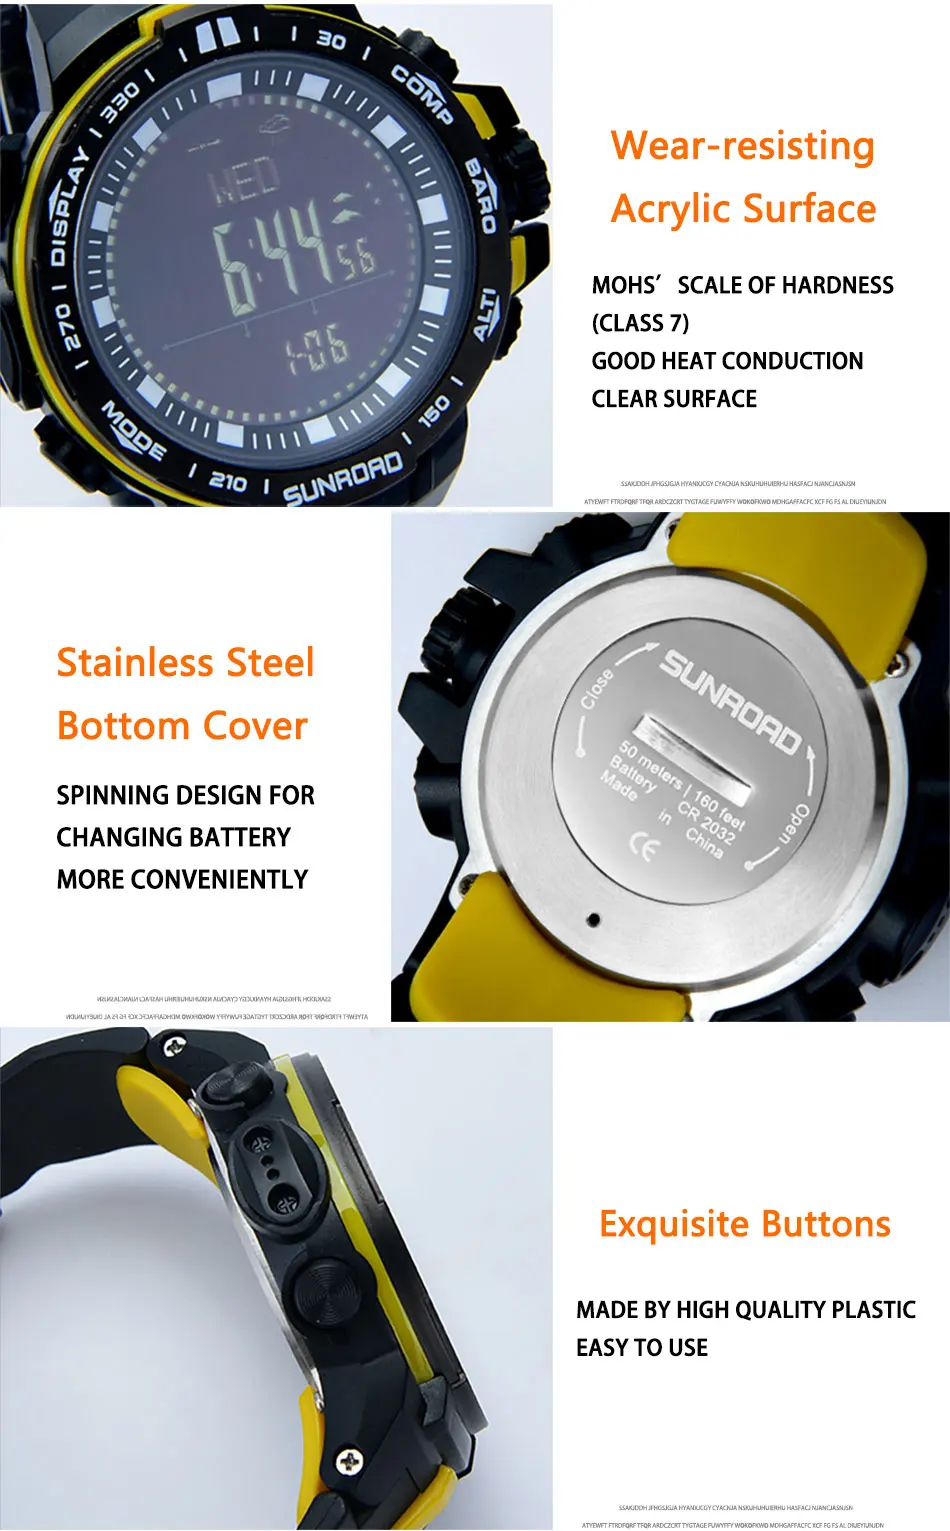 SUNROAD мужские часы лучший бренд класса люкс спортивные часы цифровой альтиметр барометр компас термометр шагомер часы Reloj Hombre